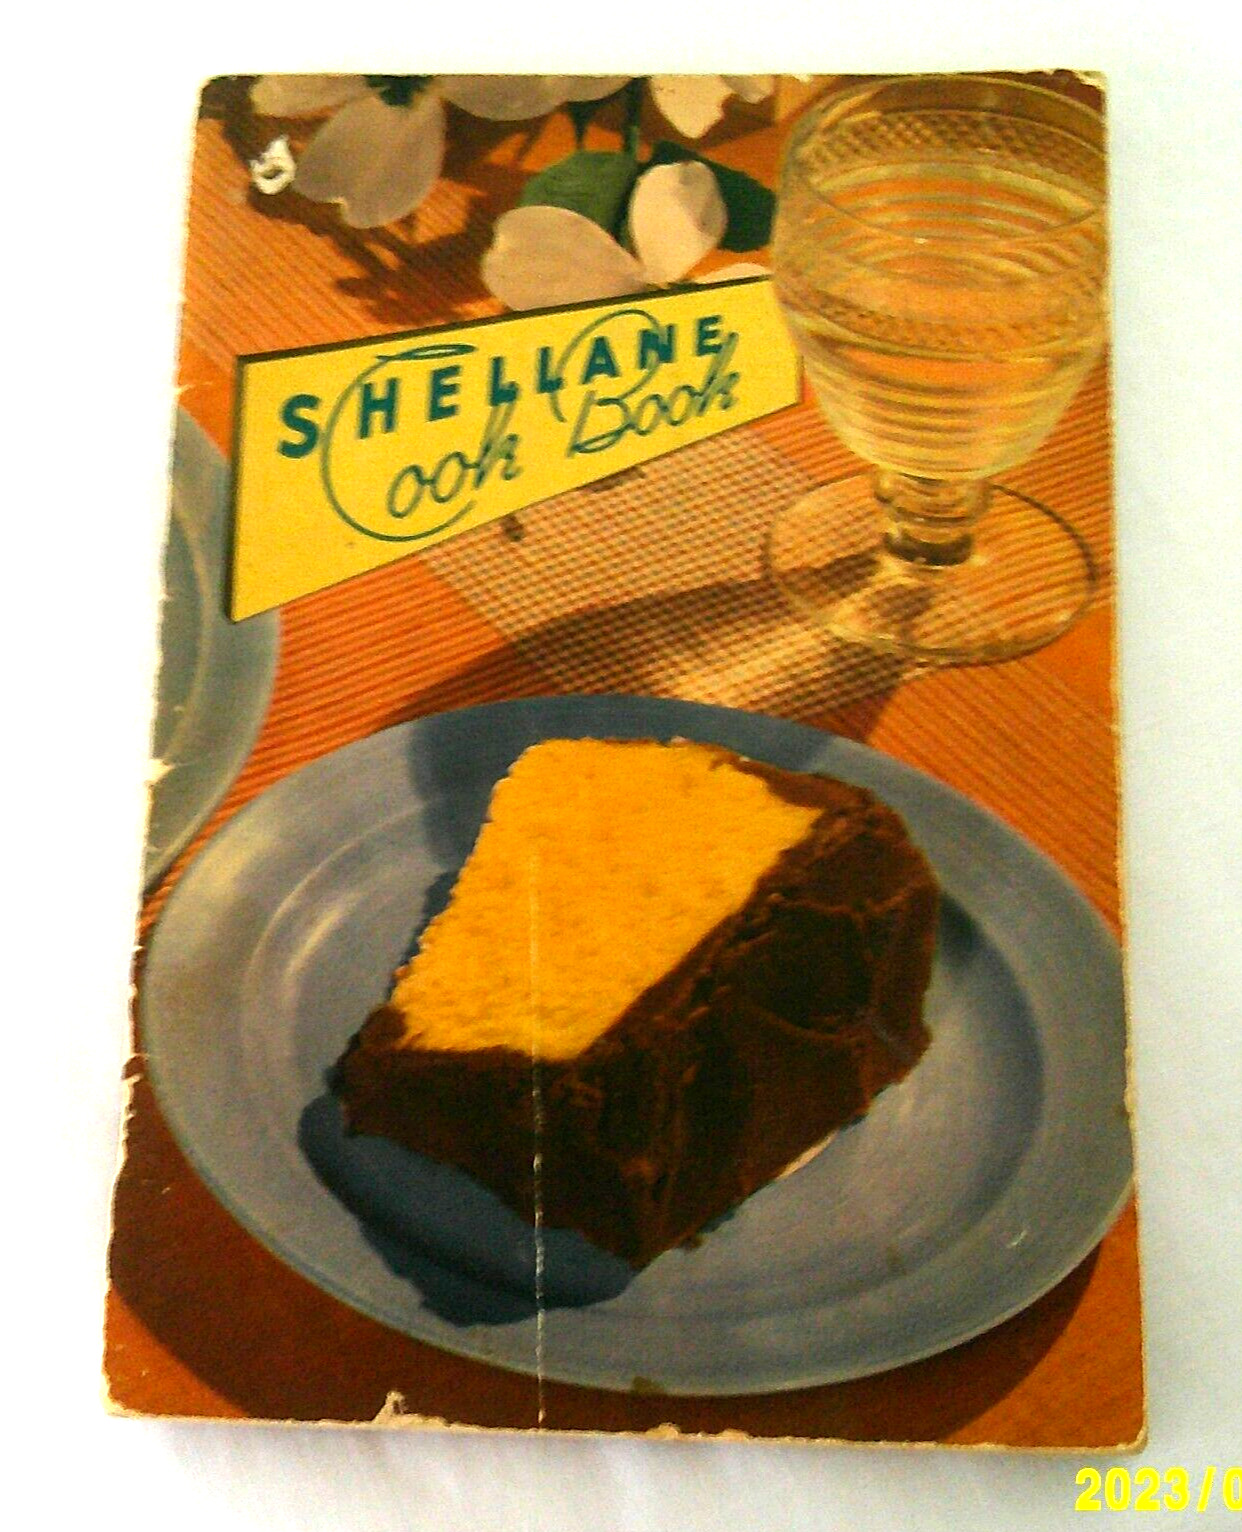 Vintage 1936 Shellane Gas Range Cook Book